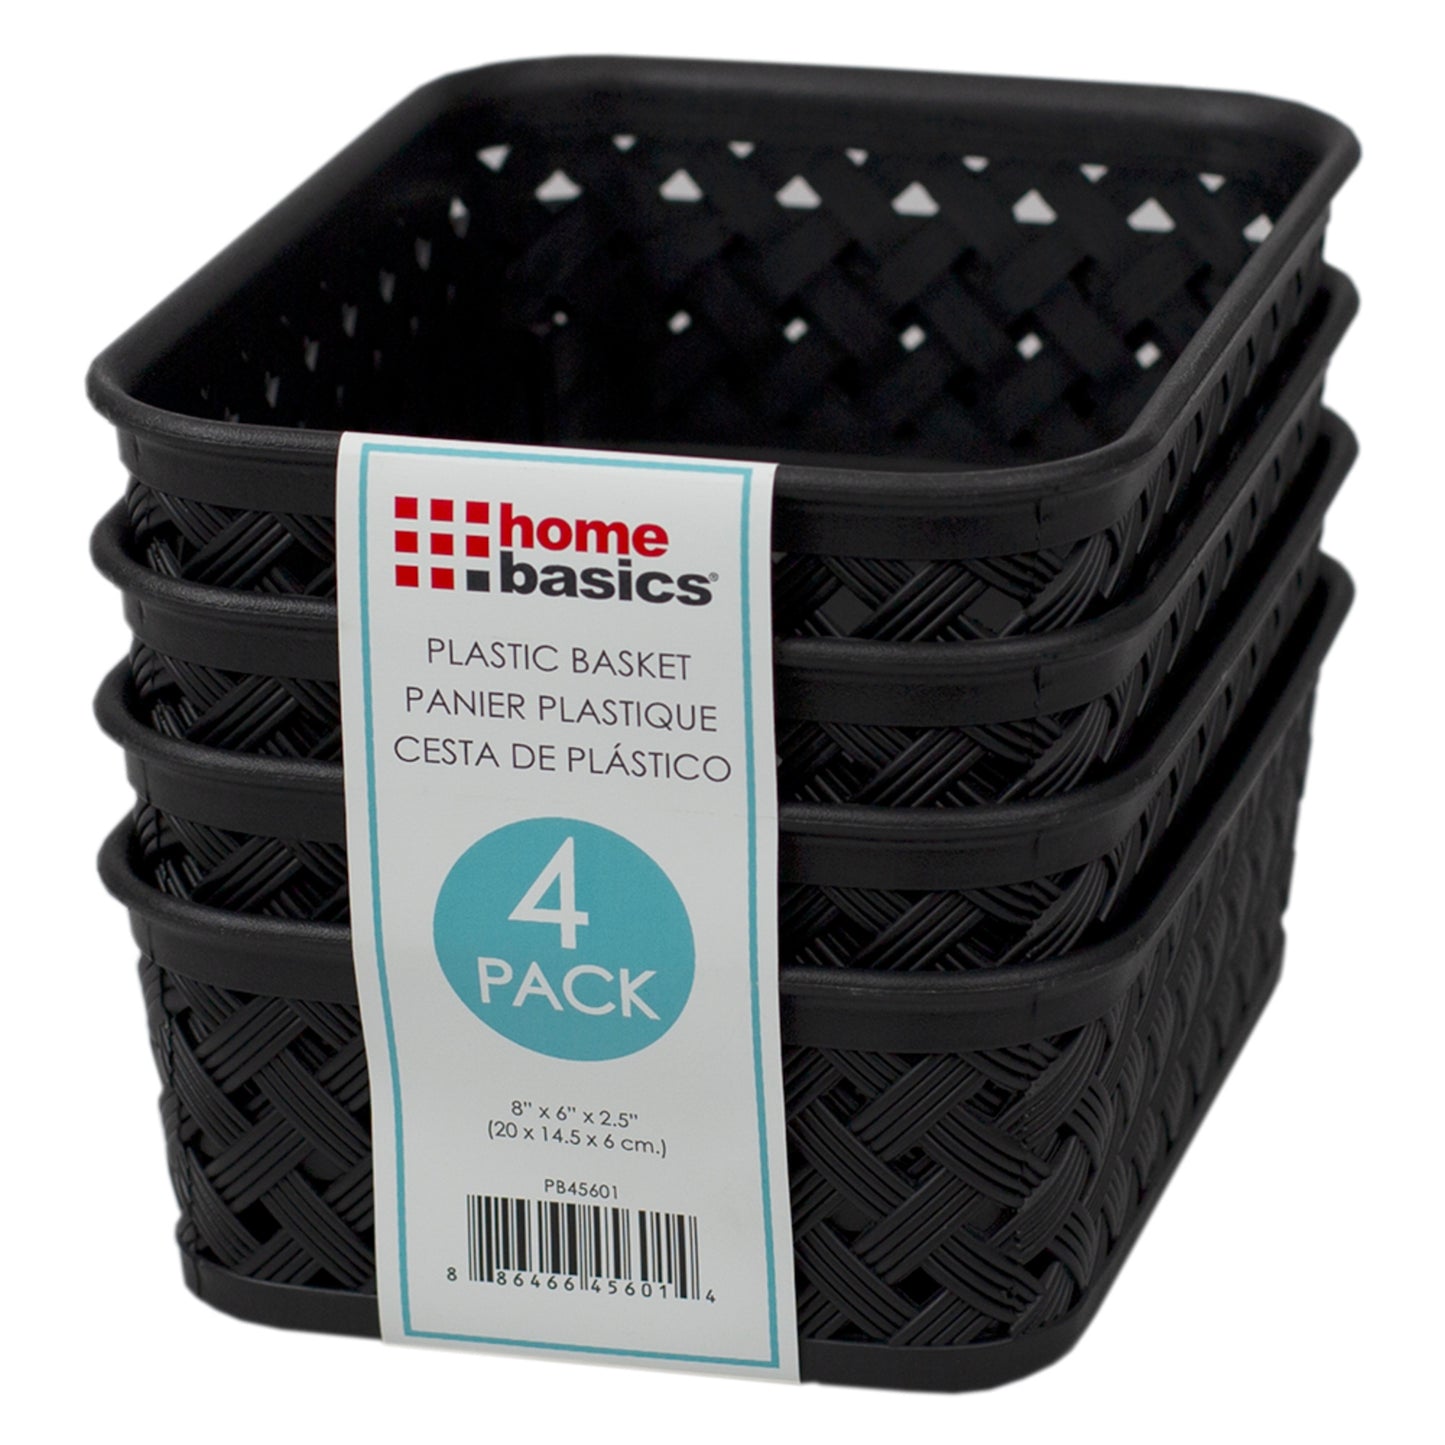 Home Basics Triple Woven 7.75" x 5.25" x 2.5" Multi-Purpose Stackable Plastic Storage Basket, (Pack of 4), Black - Black